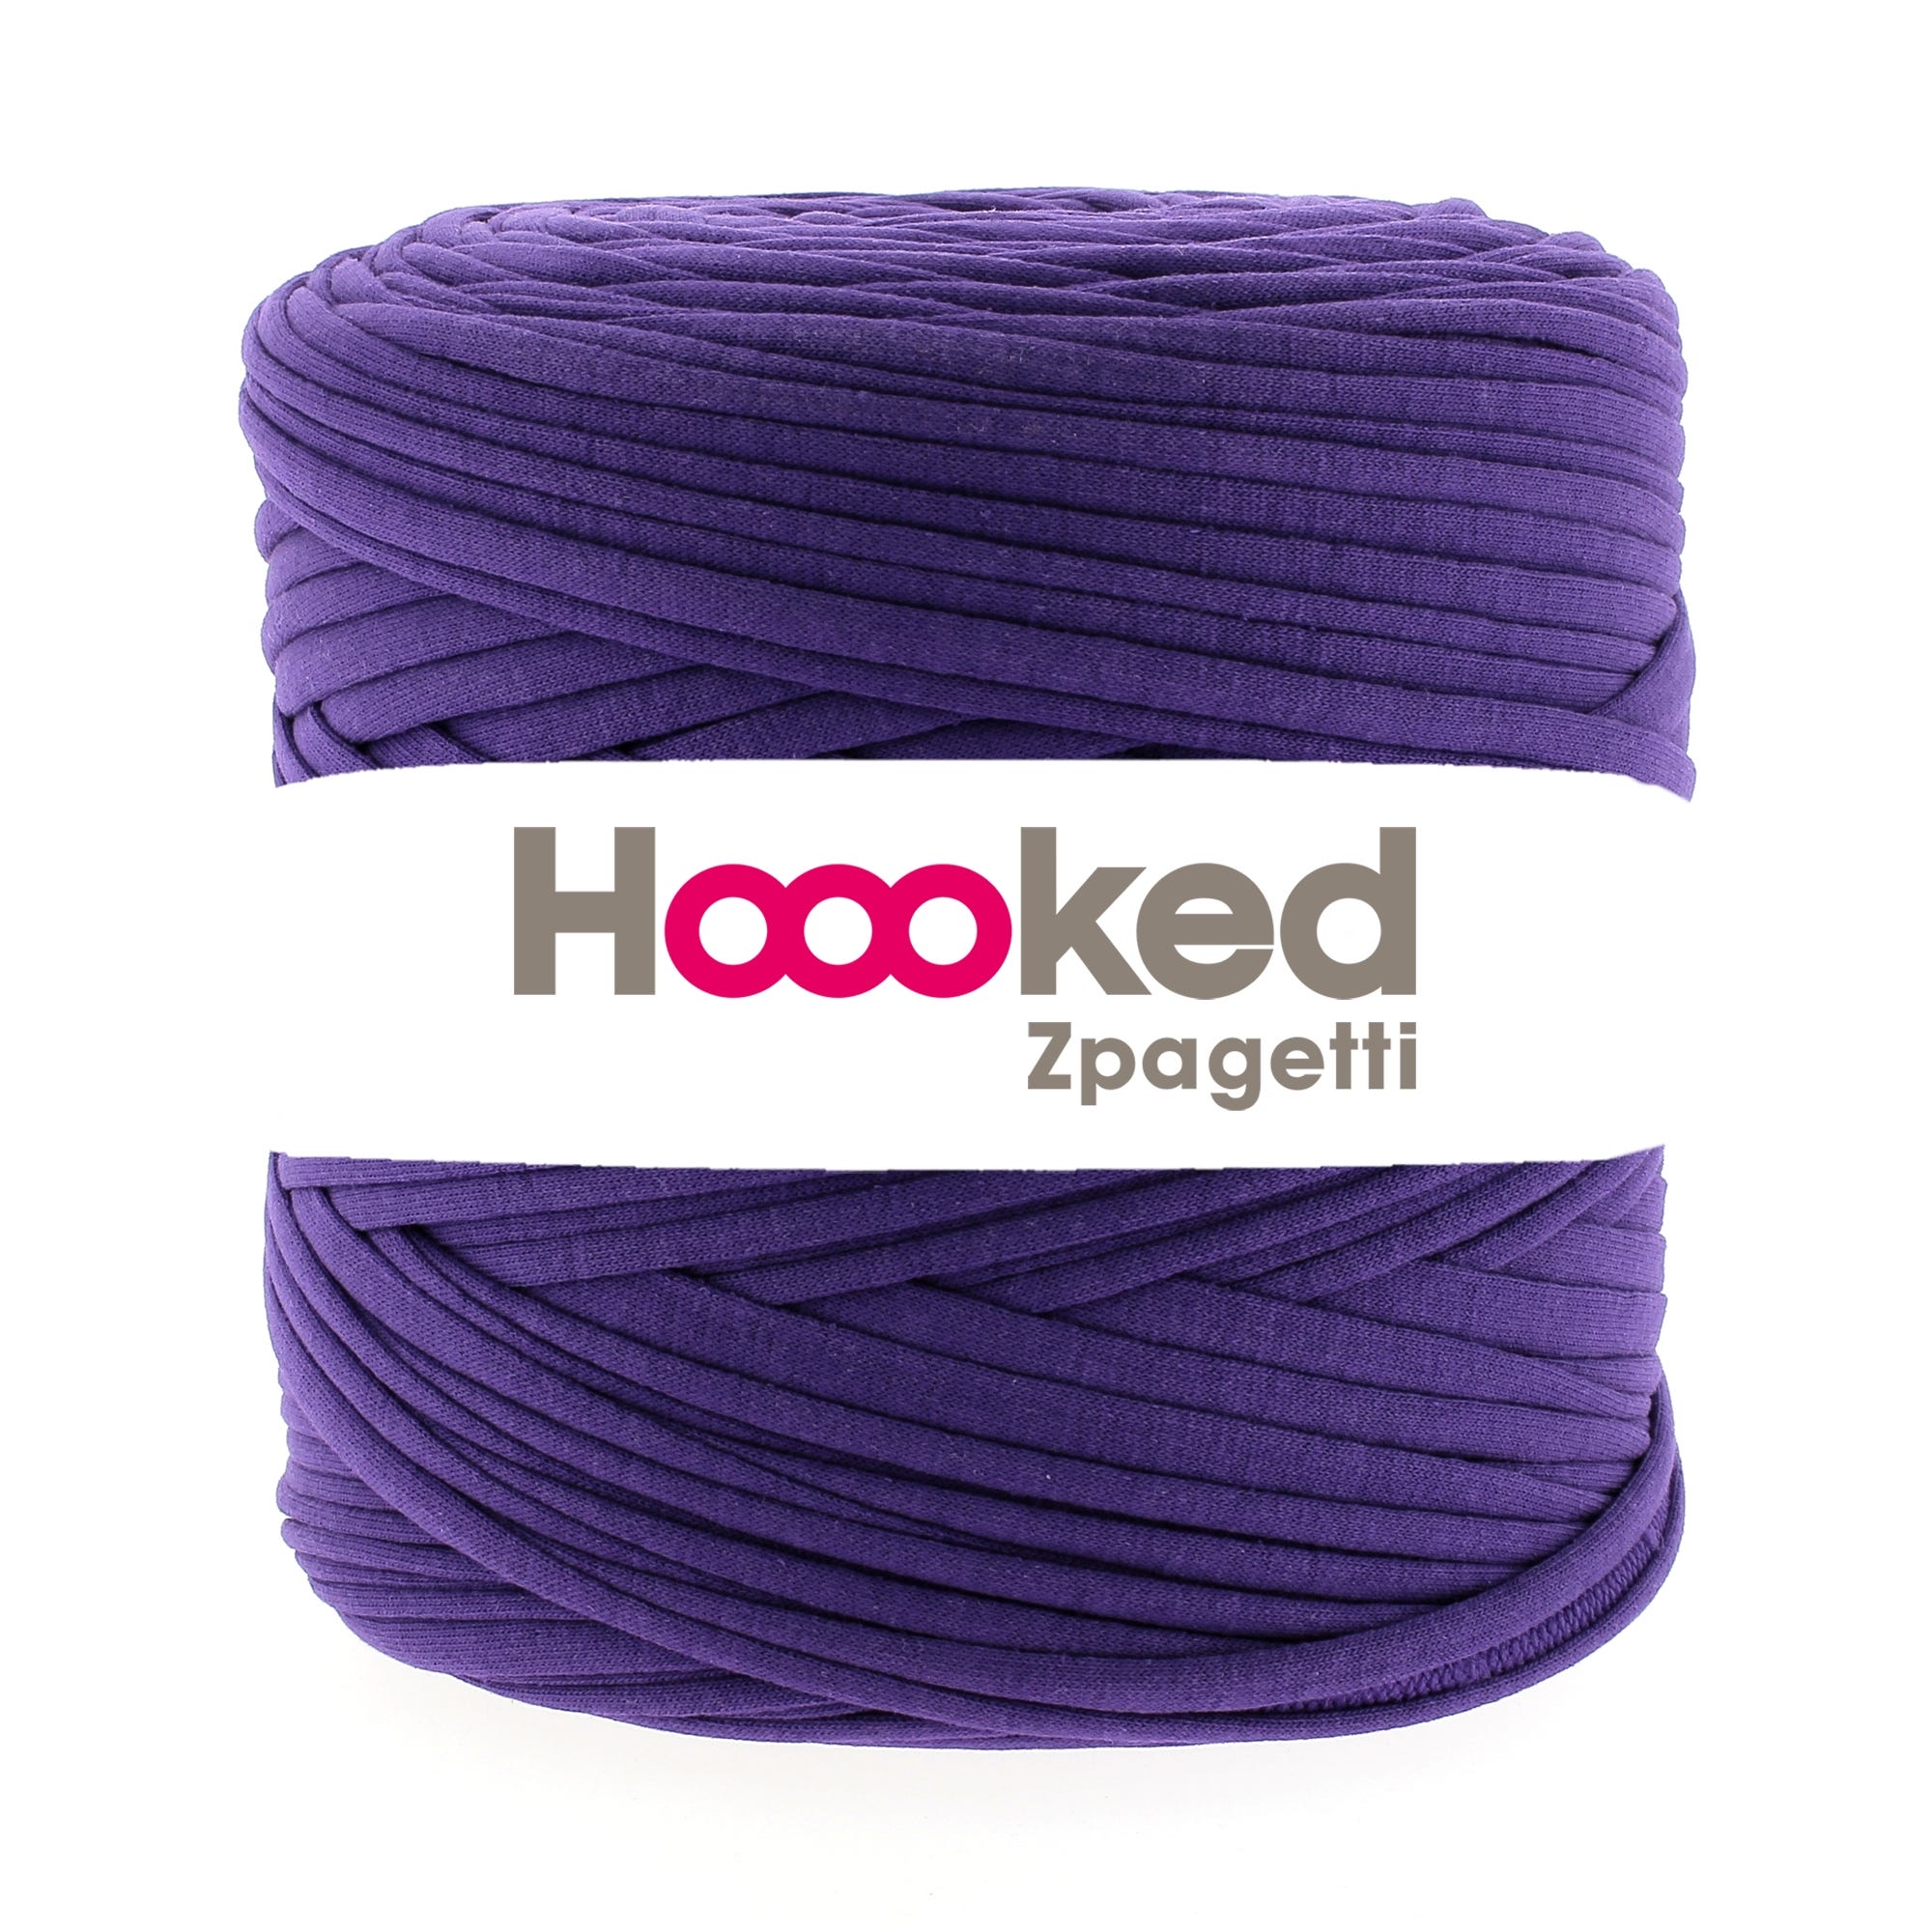 Hoooked `Zpagetti Stoffgarn Lila/Purple Ton` Neu,Häkeln,Stricken 665